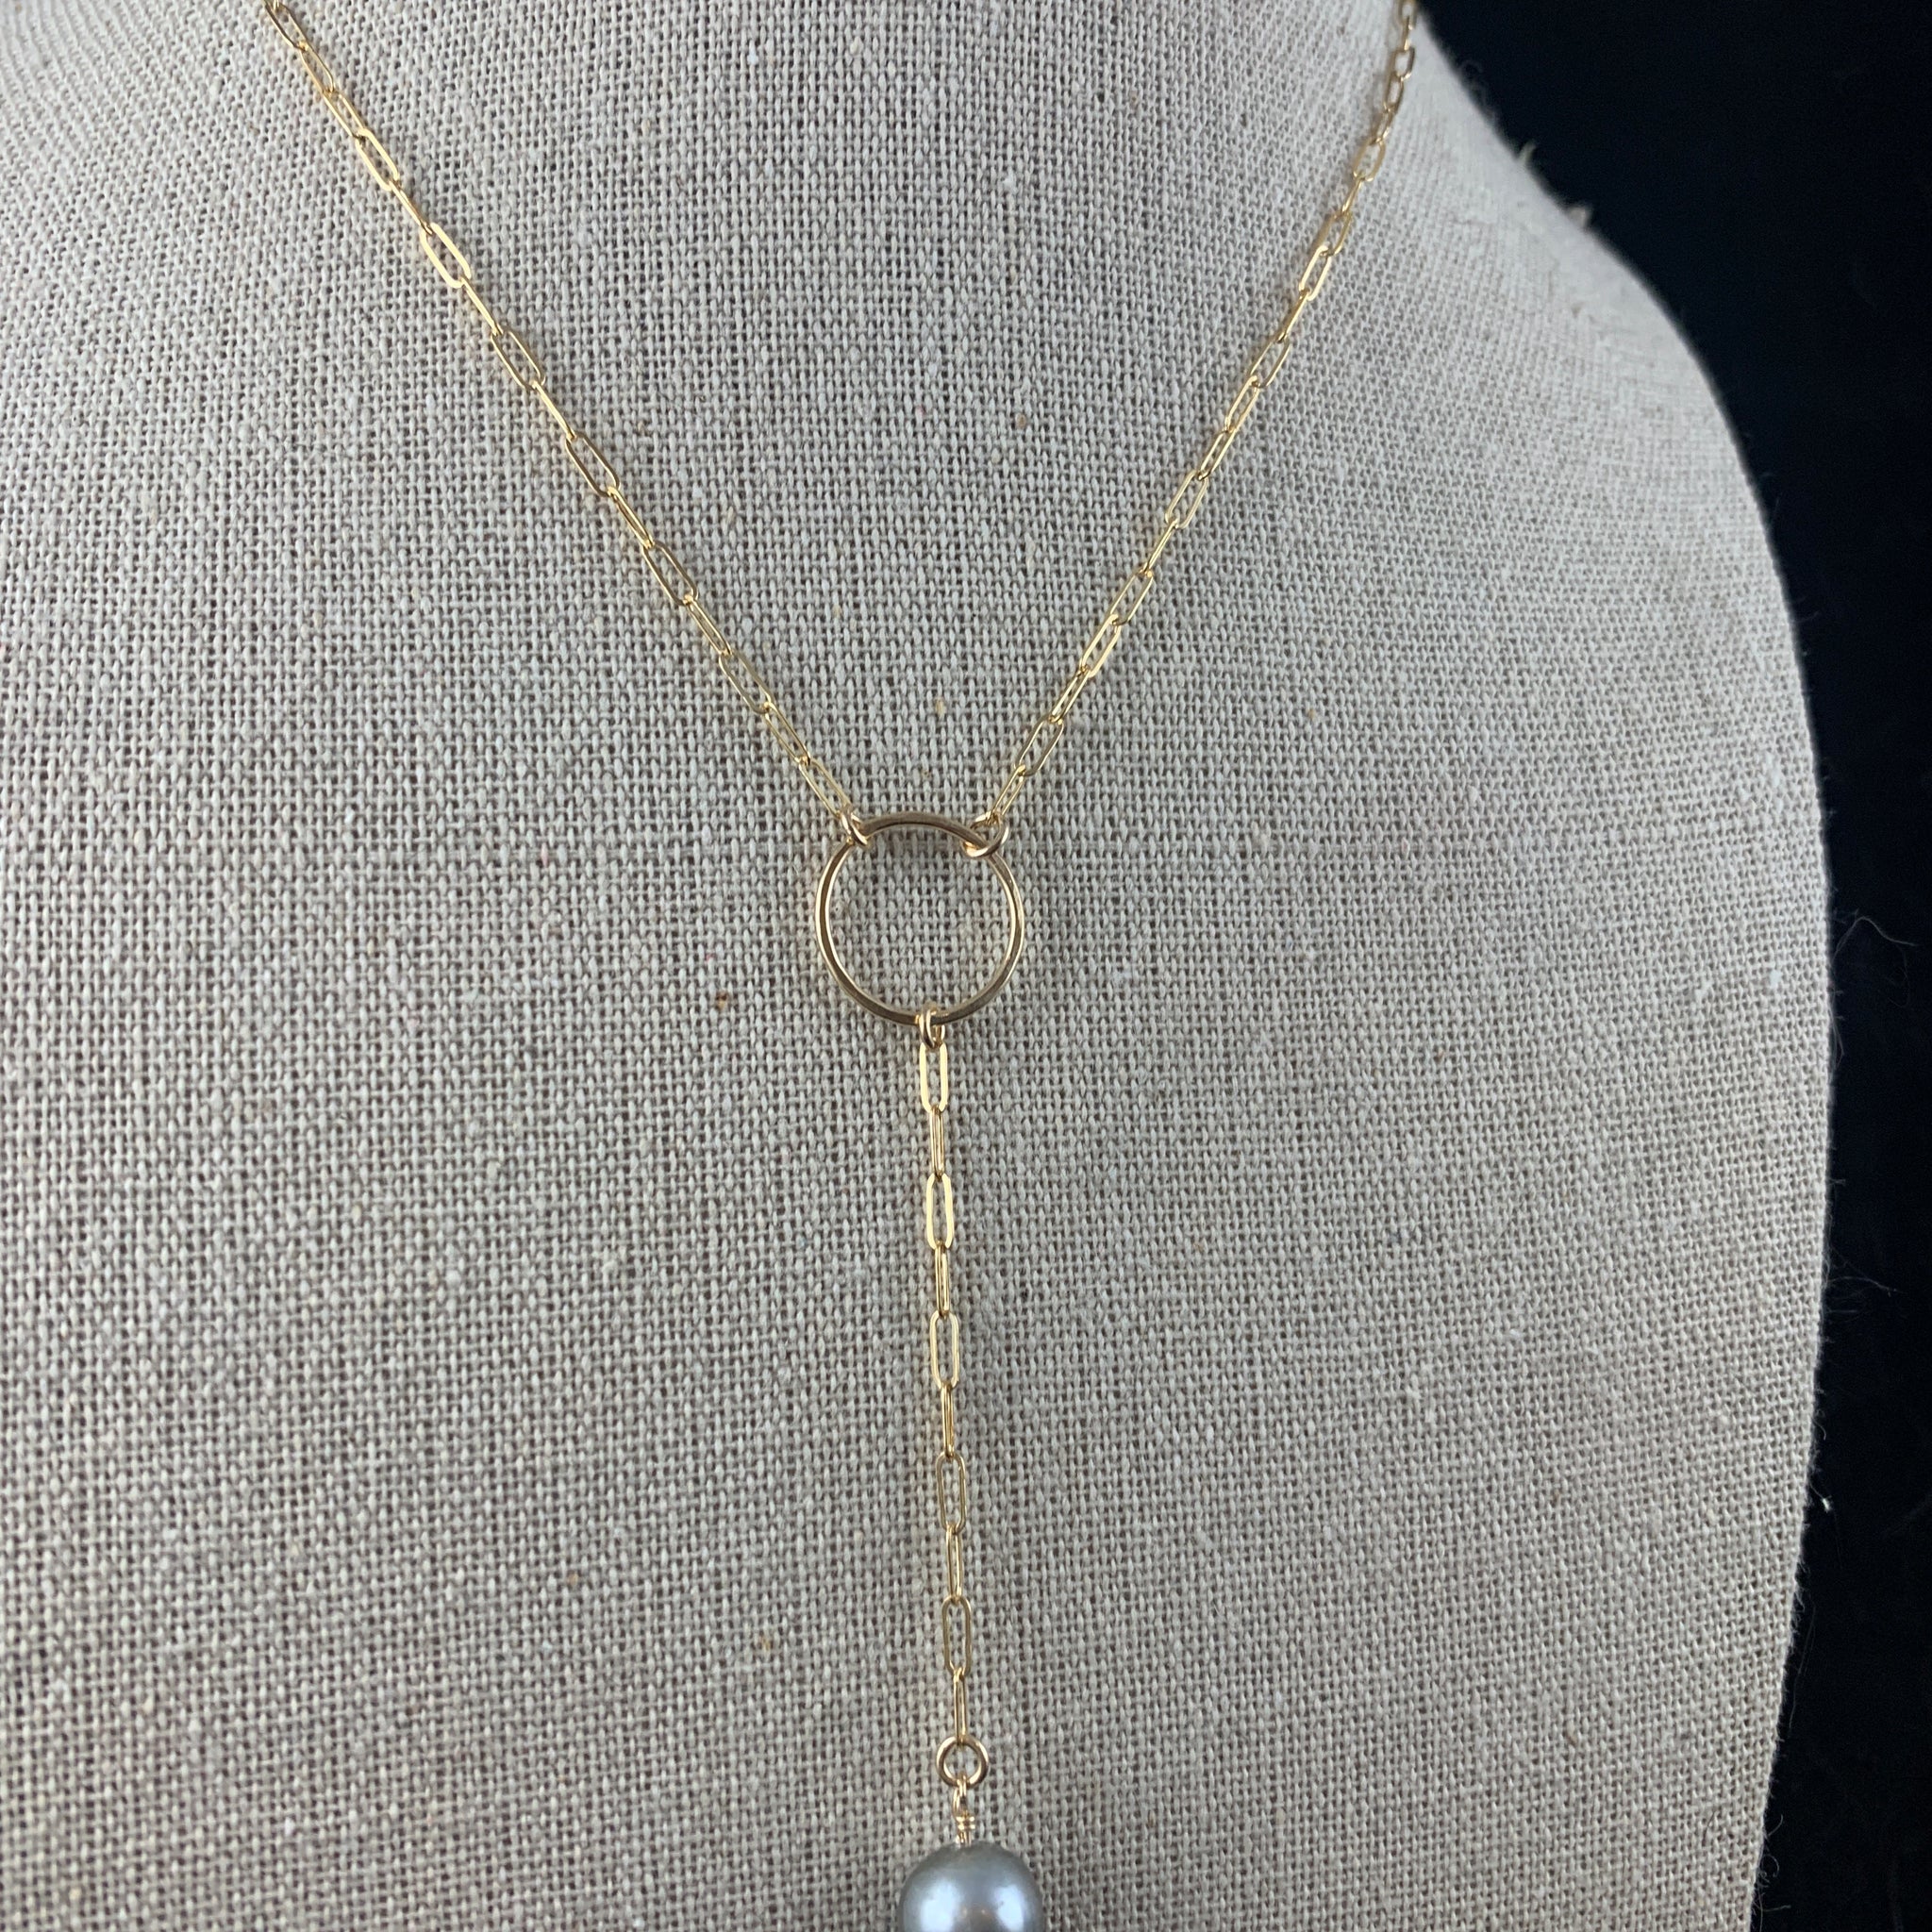 Lariat karma circle necklace with hanging Tahitian pearl